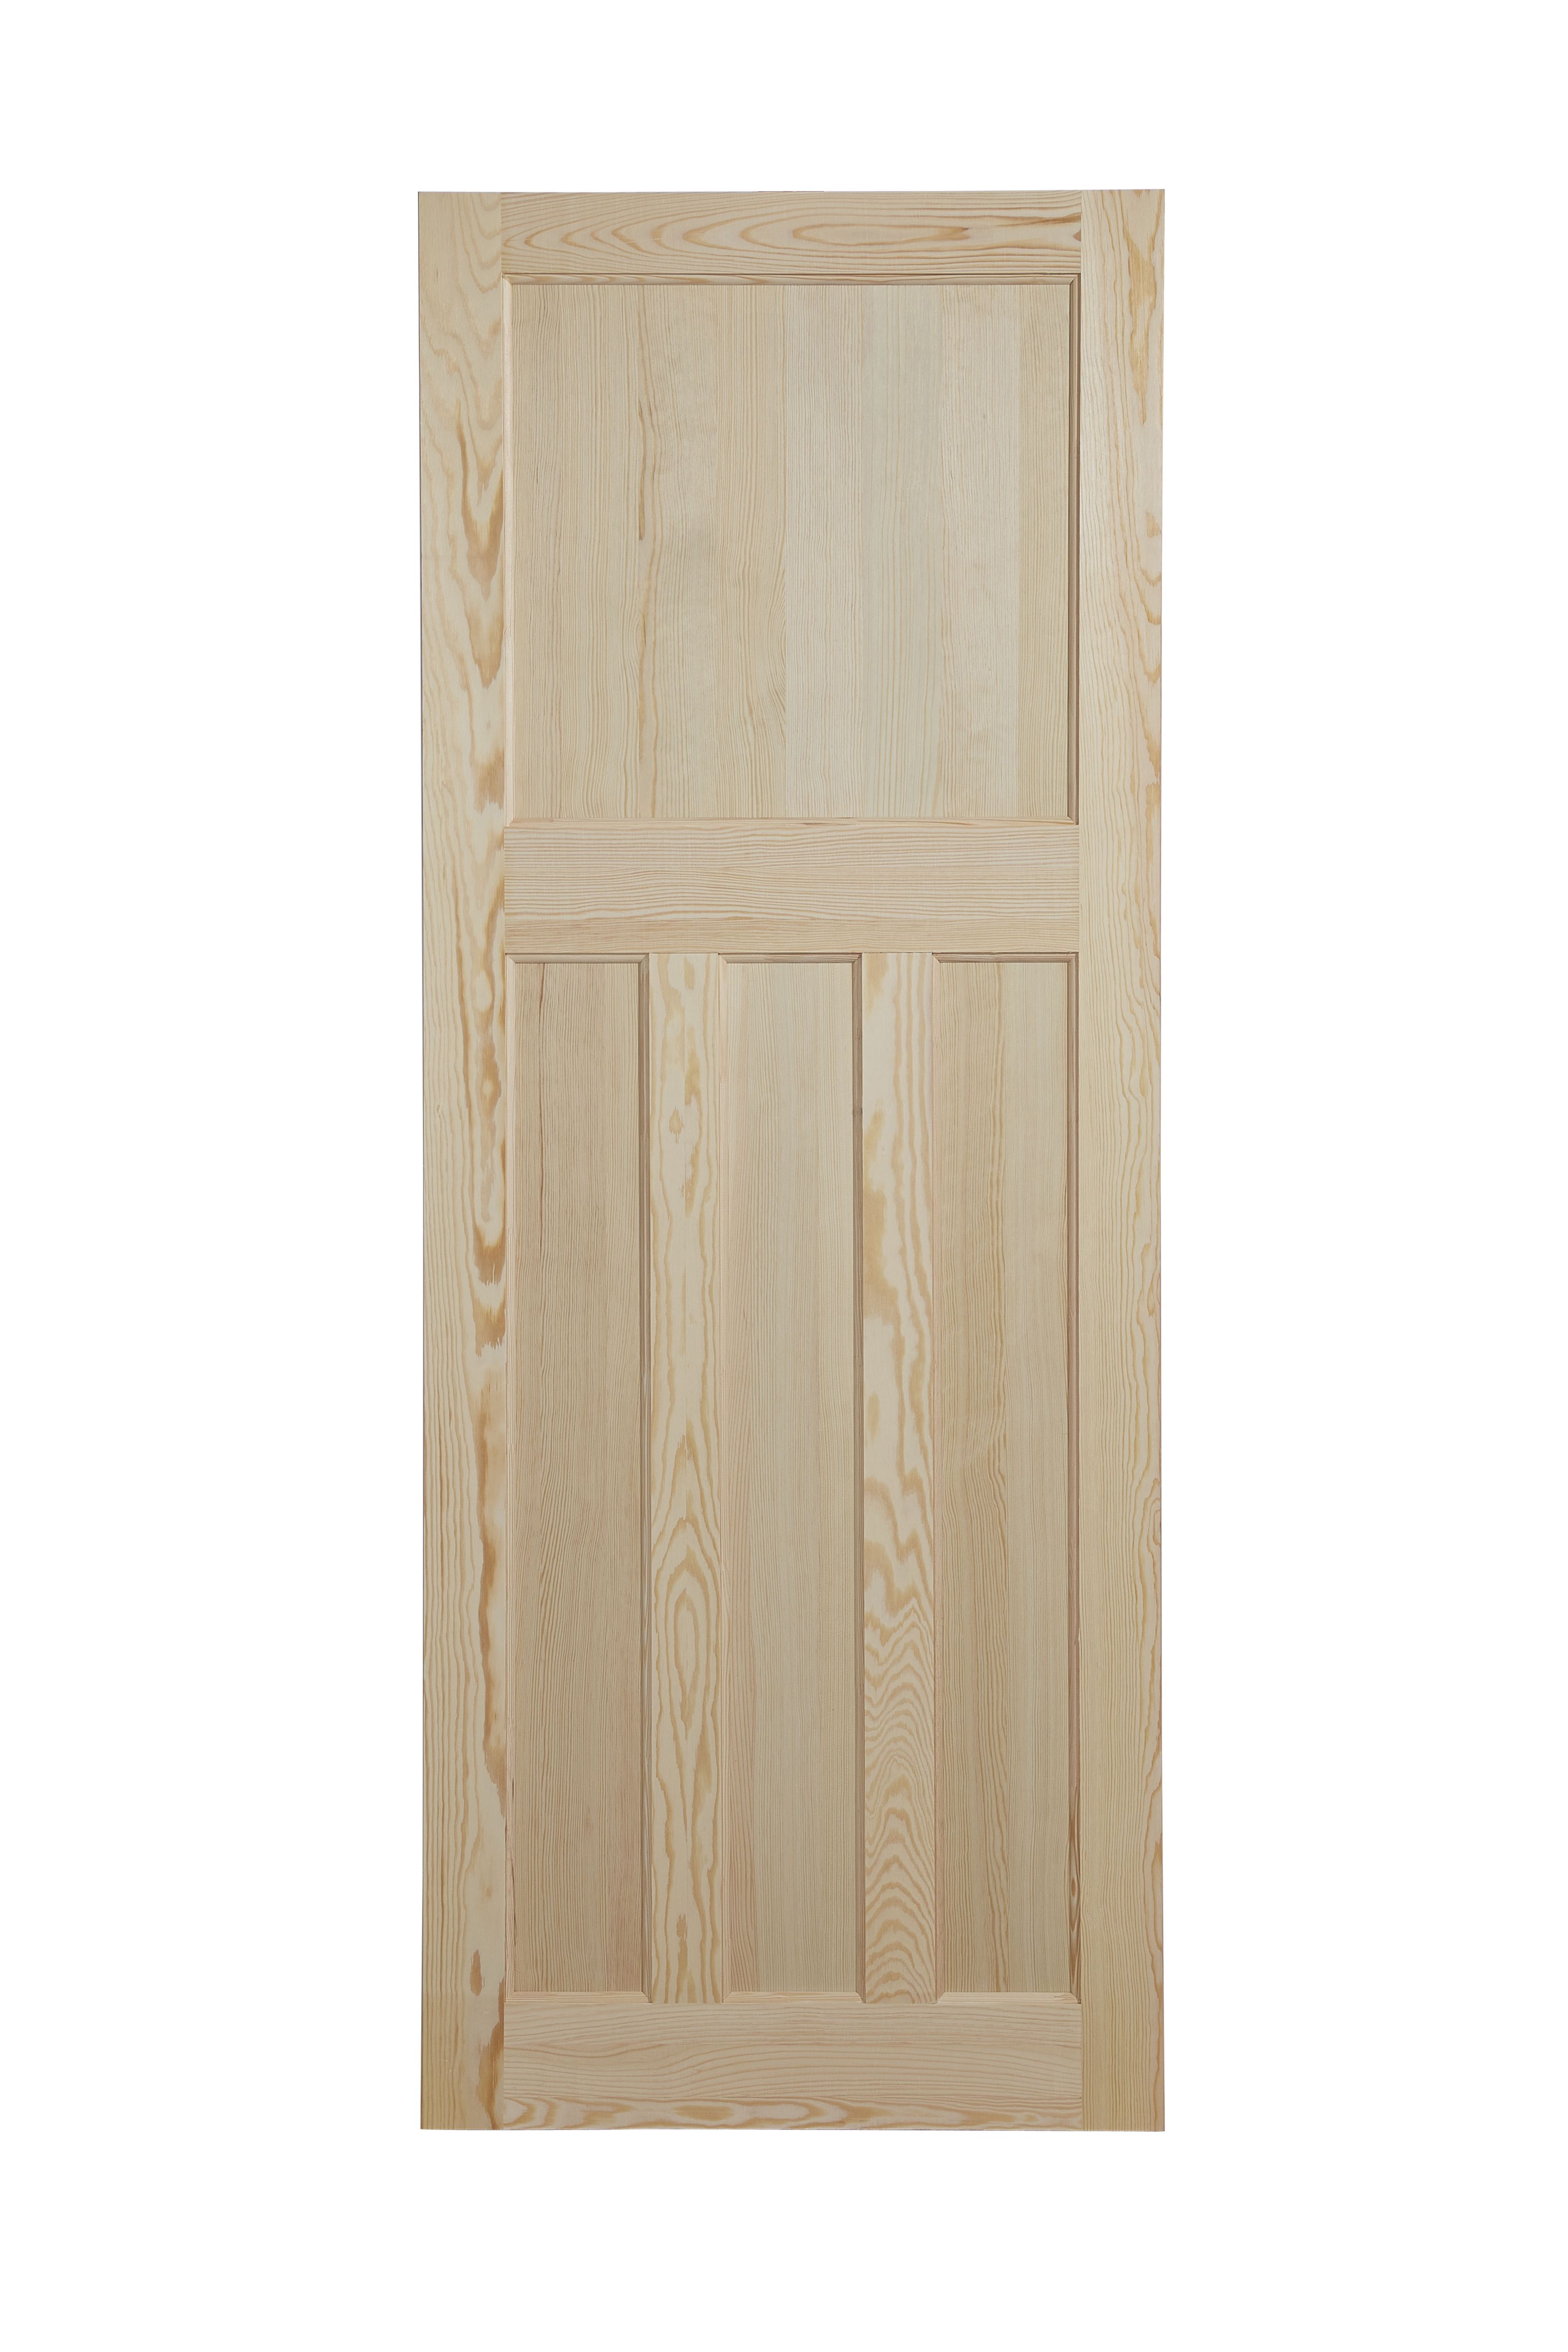 Geom 4 panel Unglazed Internal Door, (H)1981mm (W)686mm (T)35mm